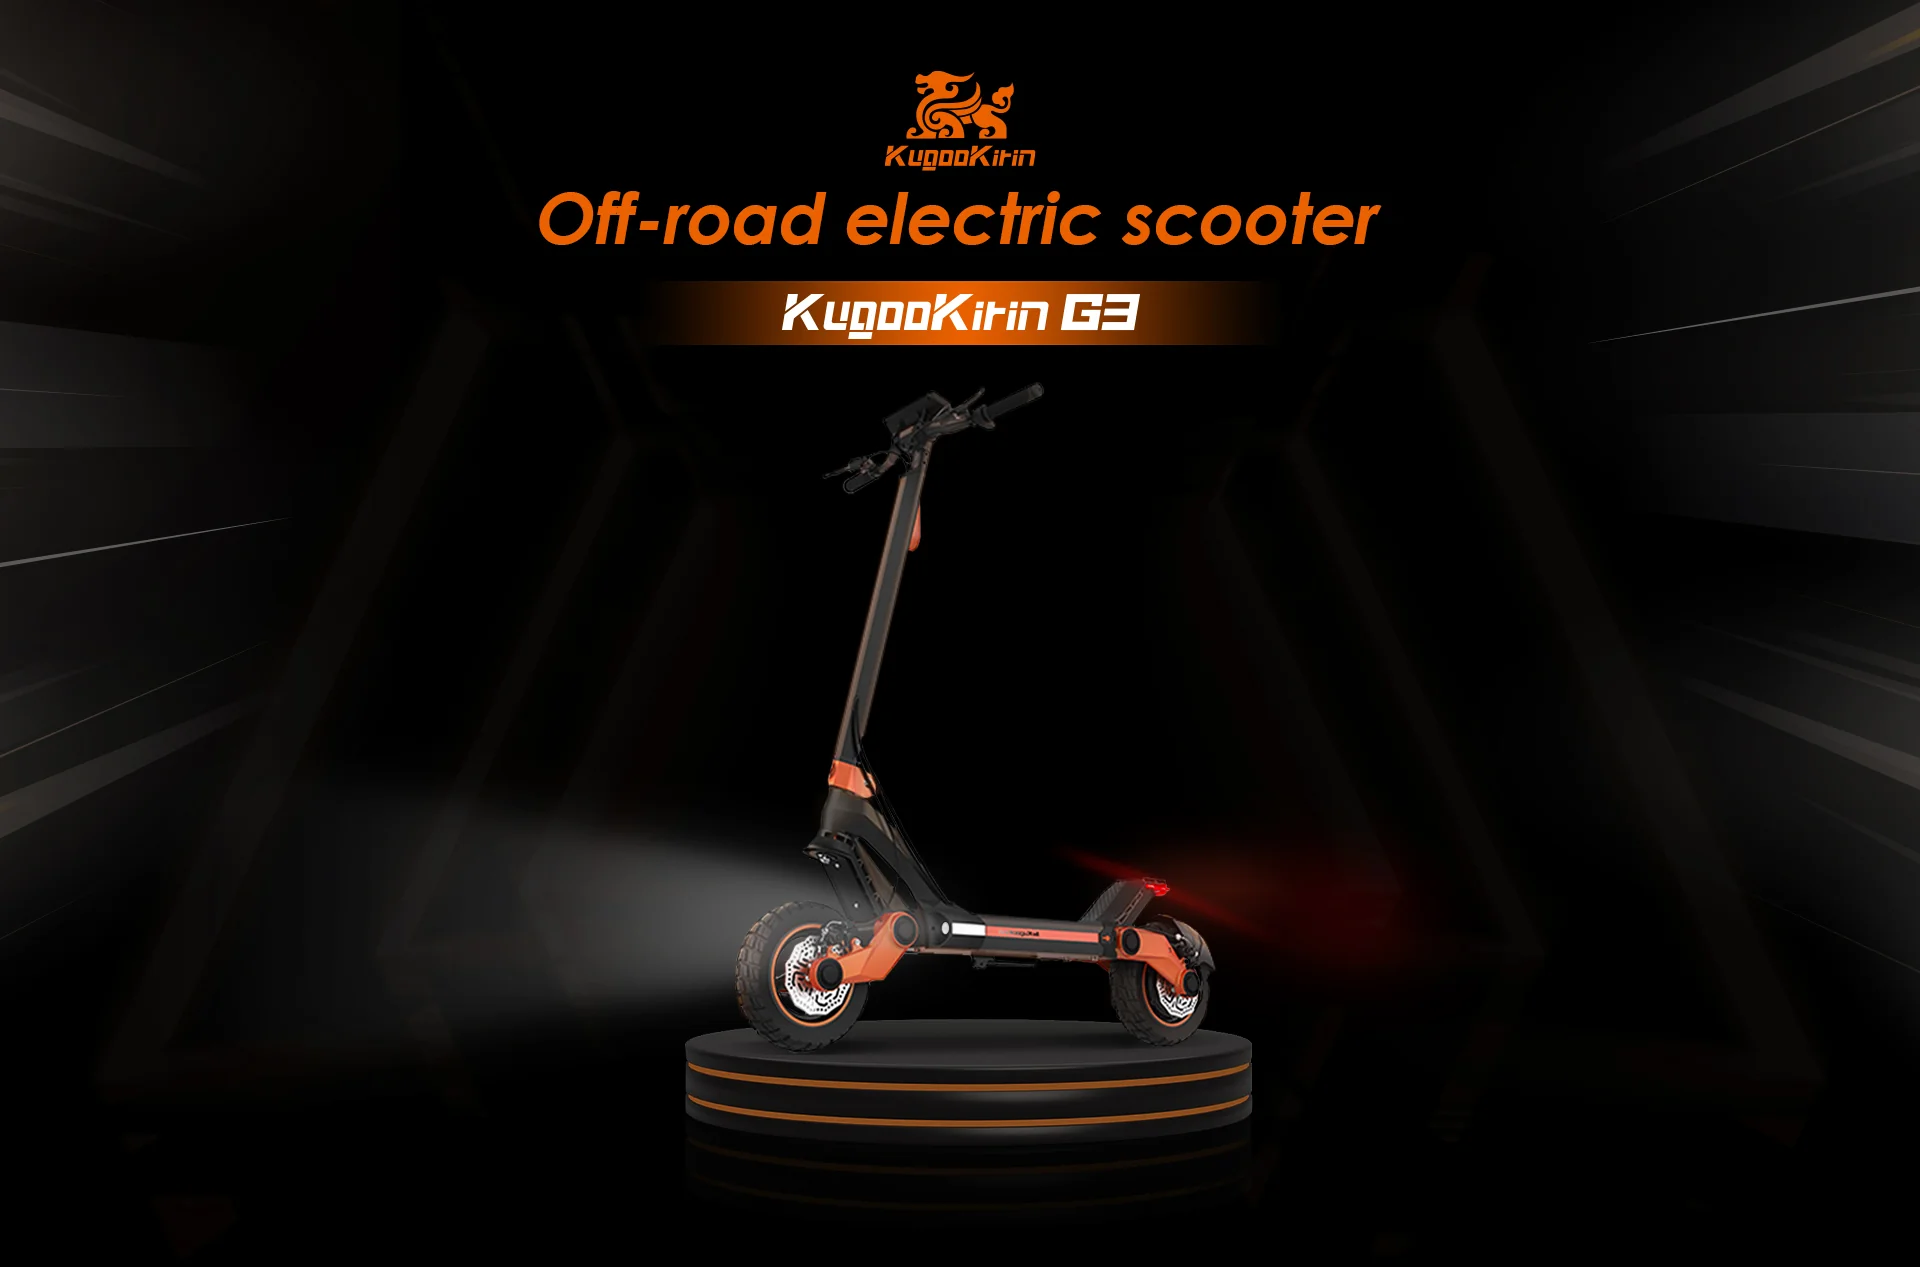 Kugoo Kirin G3 Electric Scooter